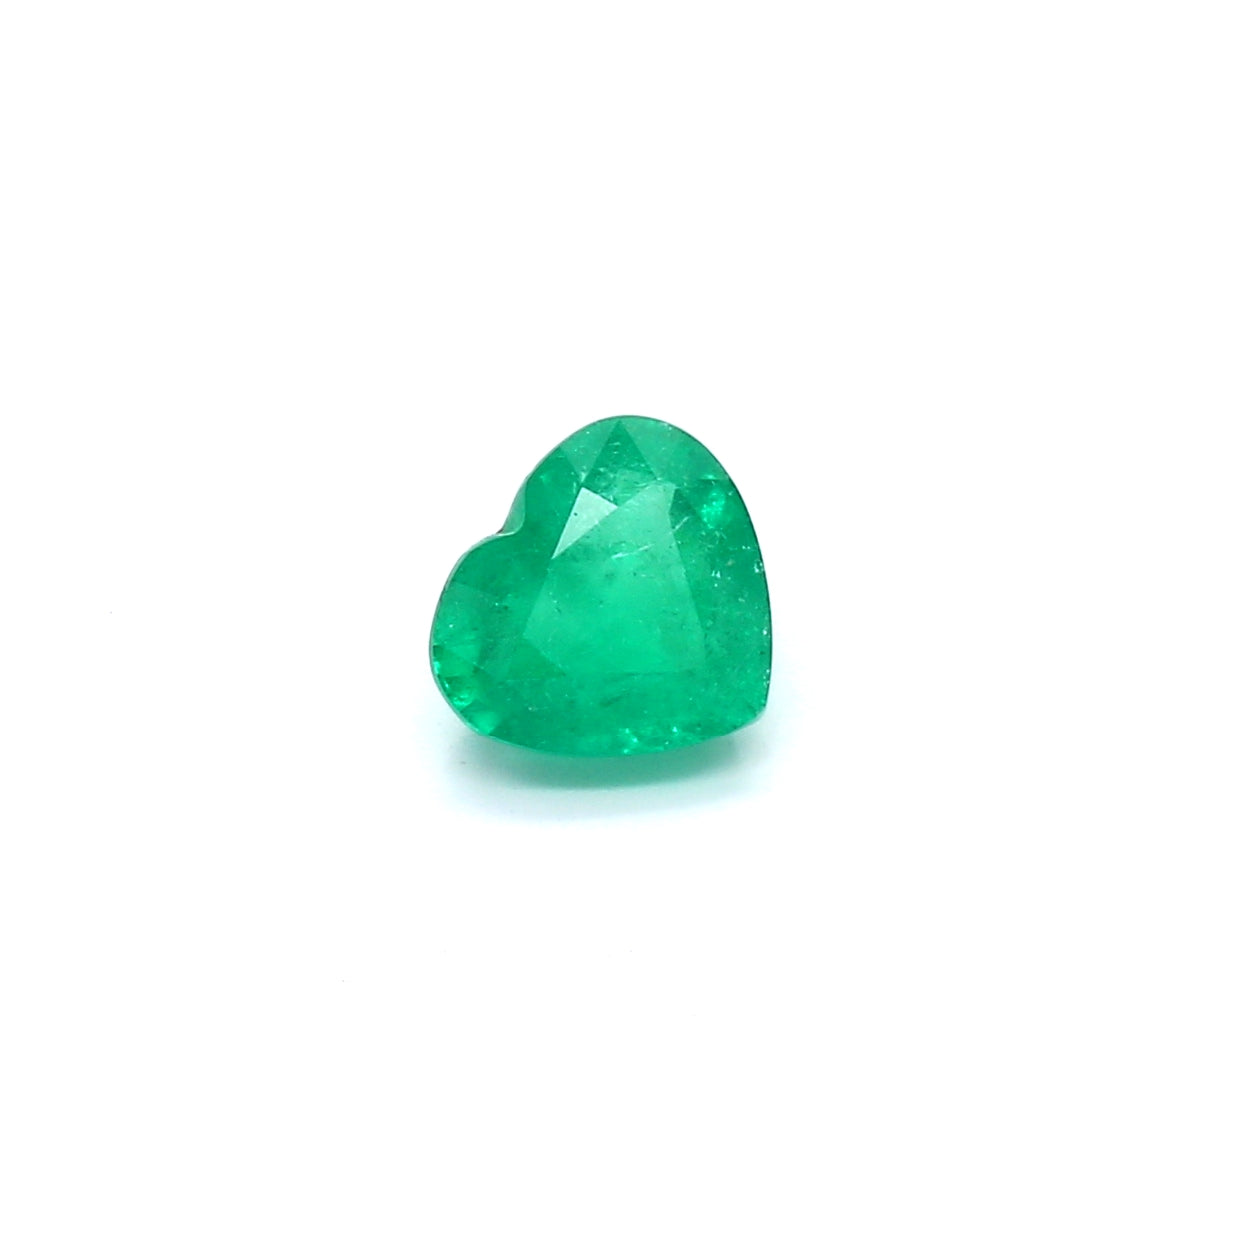 0.81ct Heart Shape Emerald, Moderate Oil, Zambia - 5.84 x 6.42 x 3.79mm